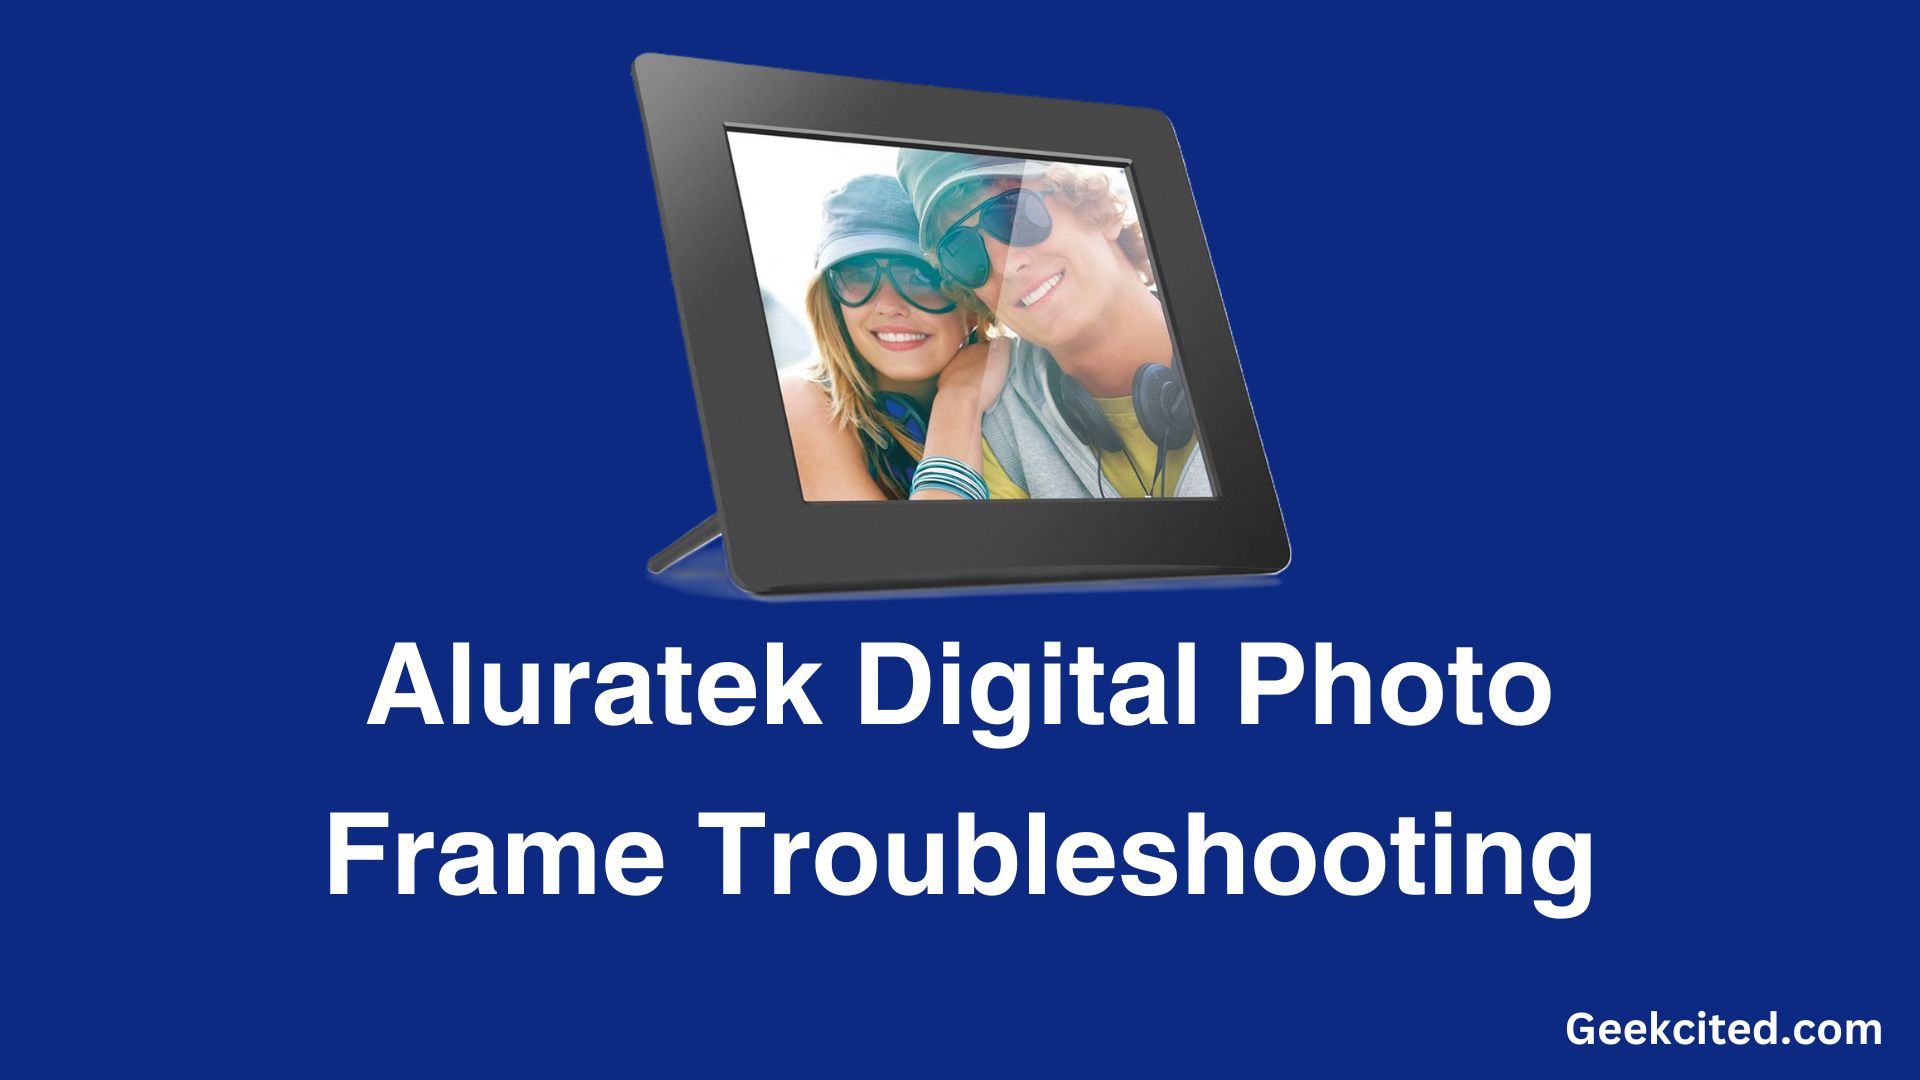 Aluratek Digital Photo Frame Troubleshooting